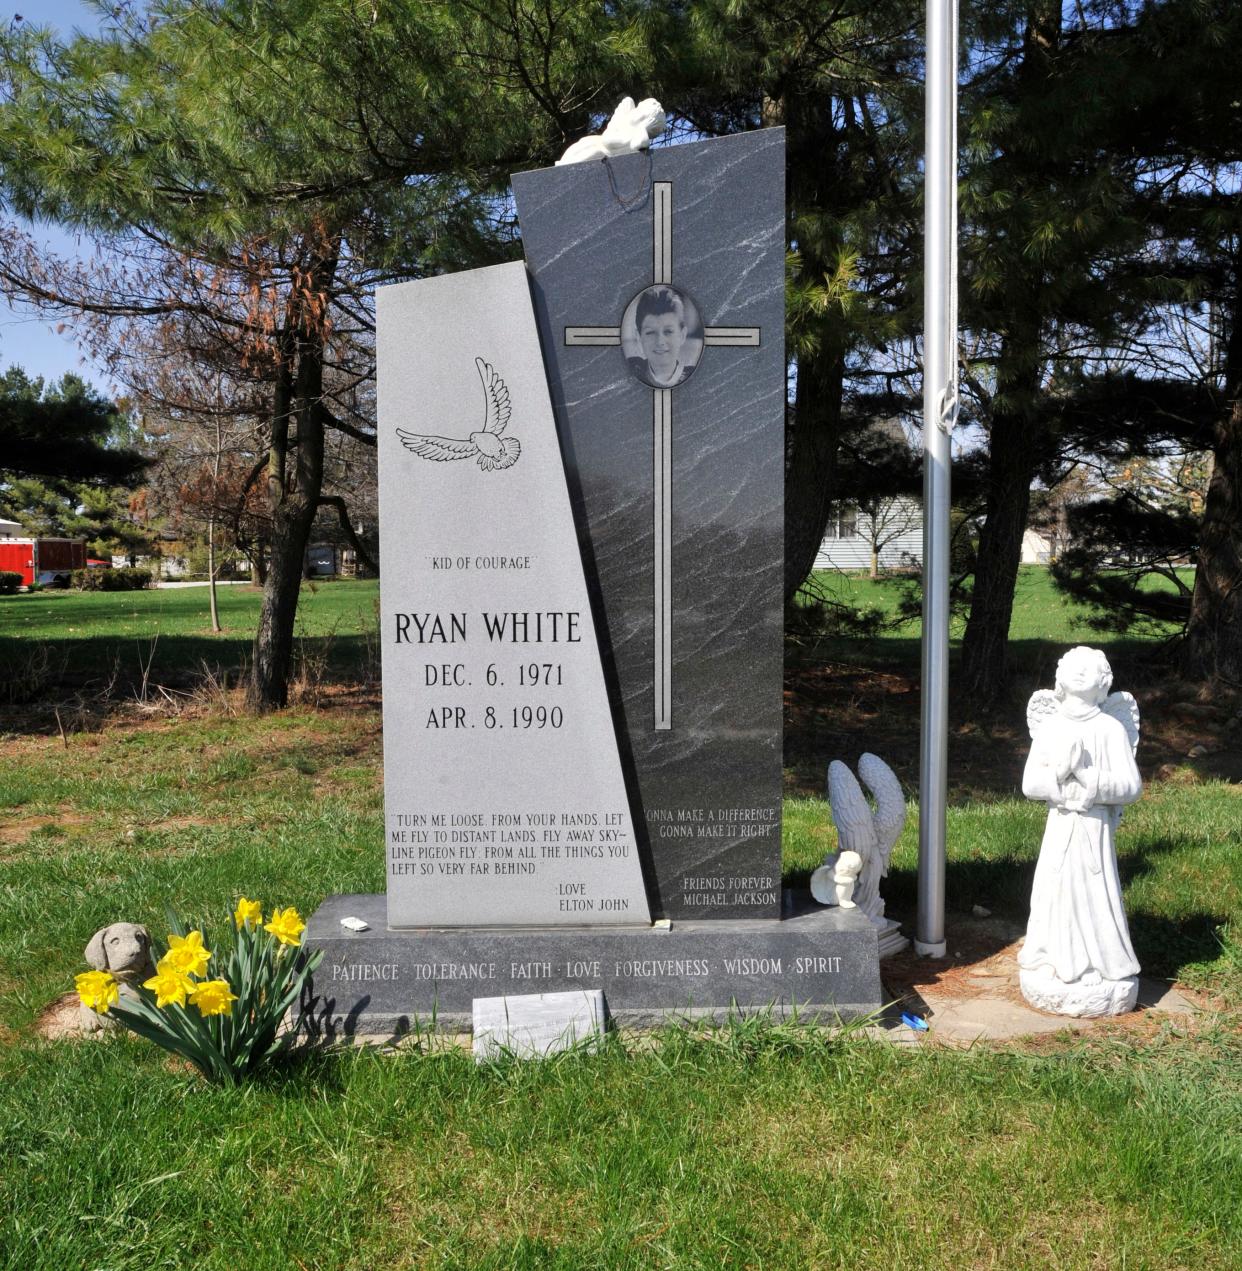 Ryan White's grave in the Cicero Cemetery in Cicero, Ind.,